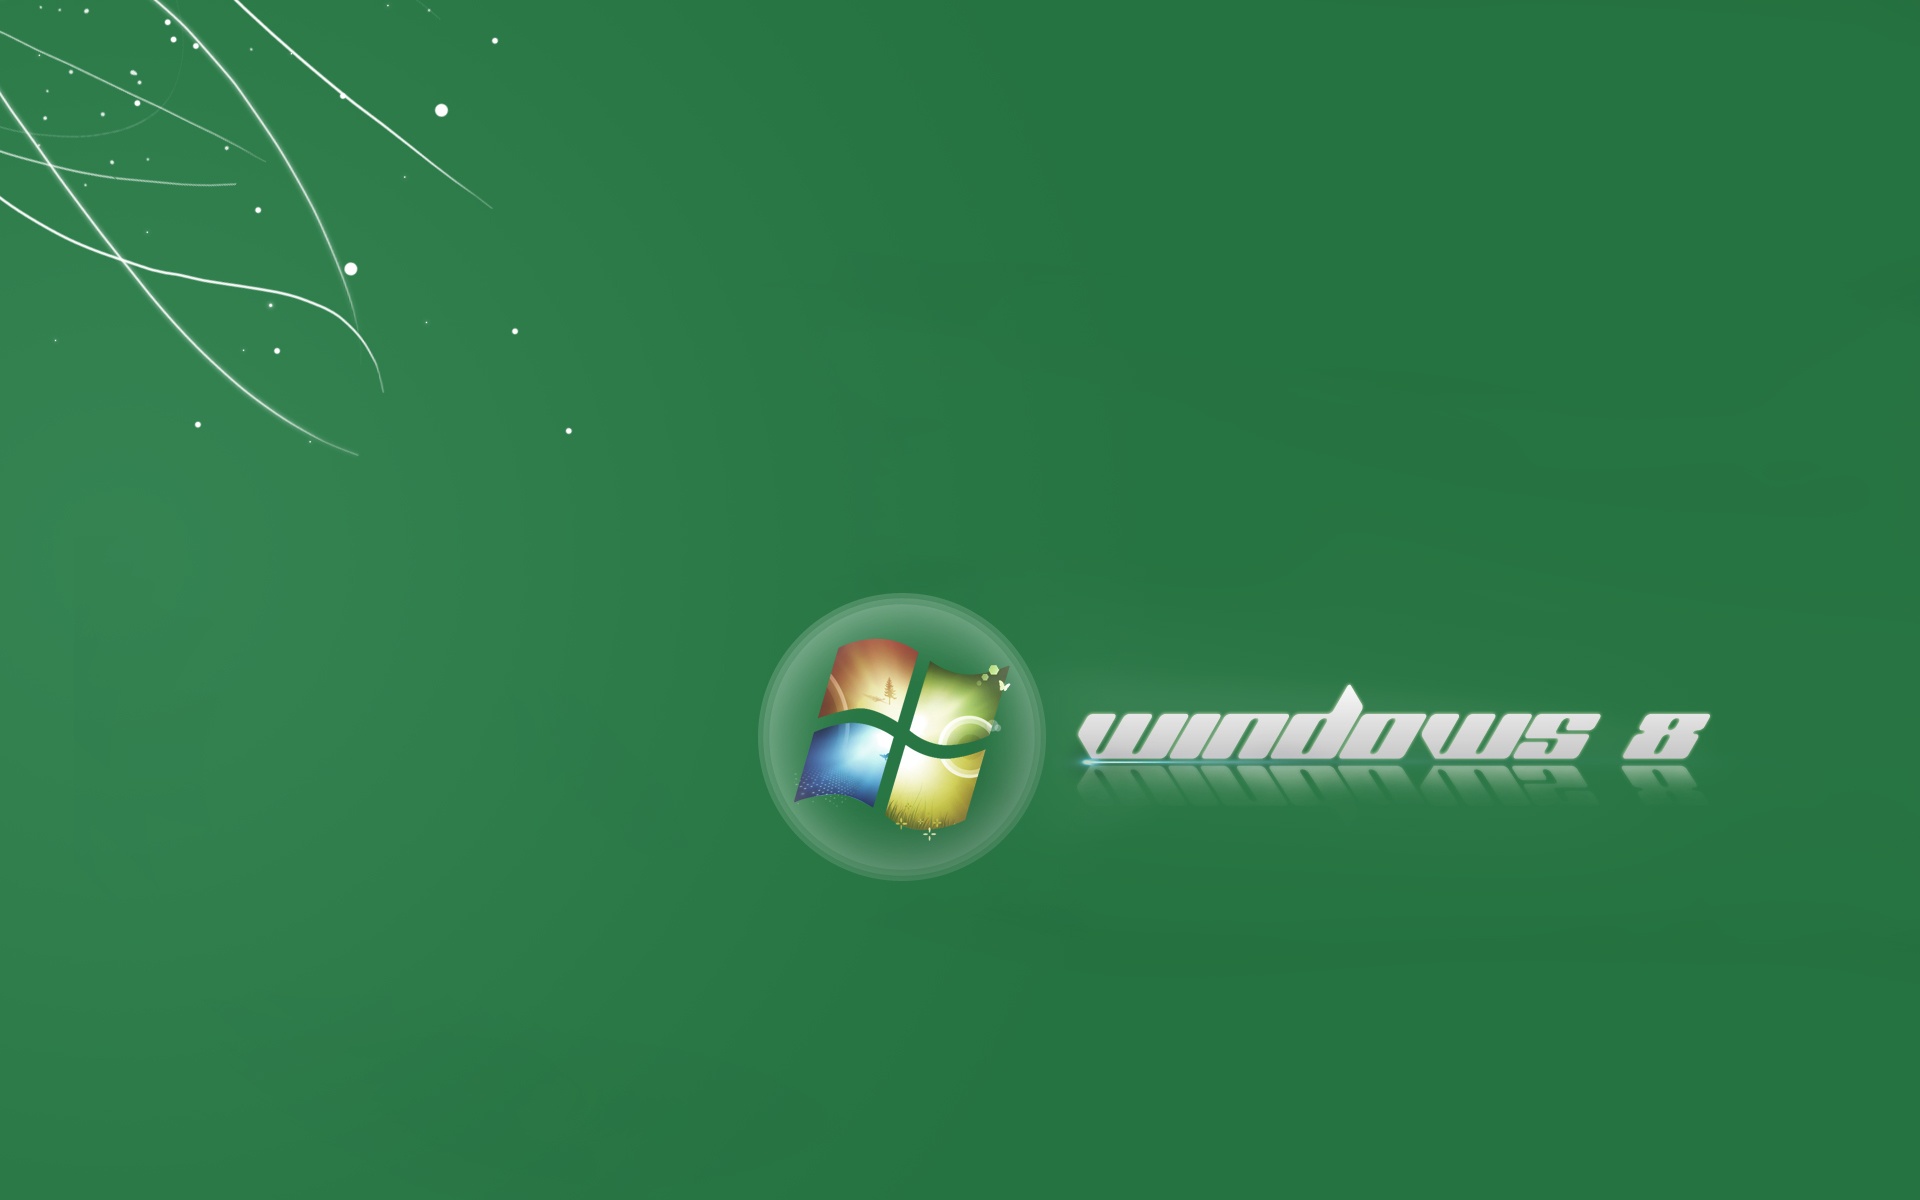  Windows 8 Background Microsoft Windows 8 Circle Logo Wallpaper x 1920x1200